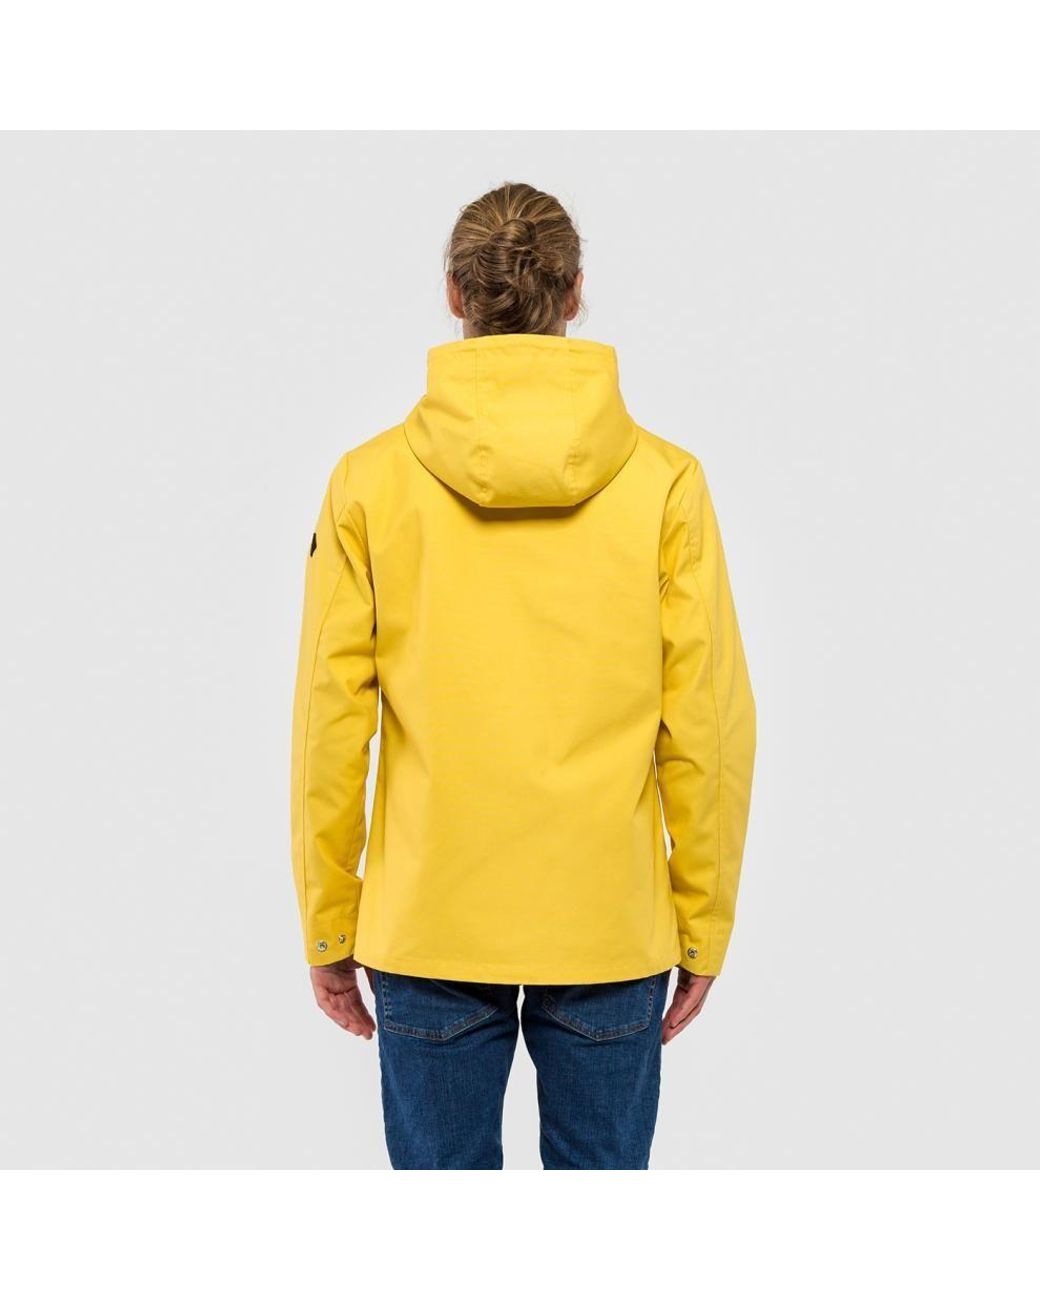 RVLT Cotton | Hooded Light Jacket 7286 | in Yellow for Men - Lyst